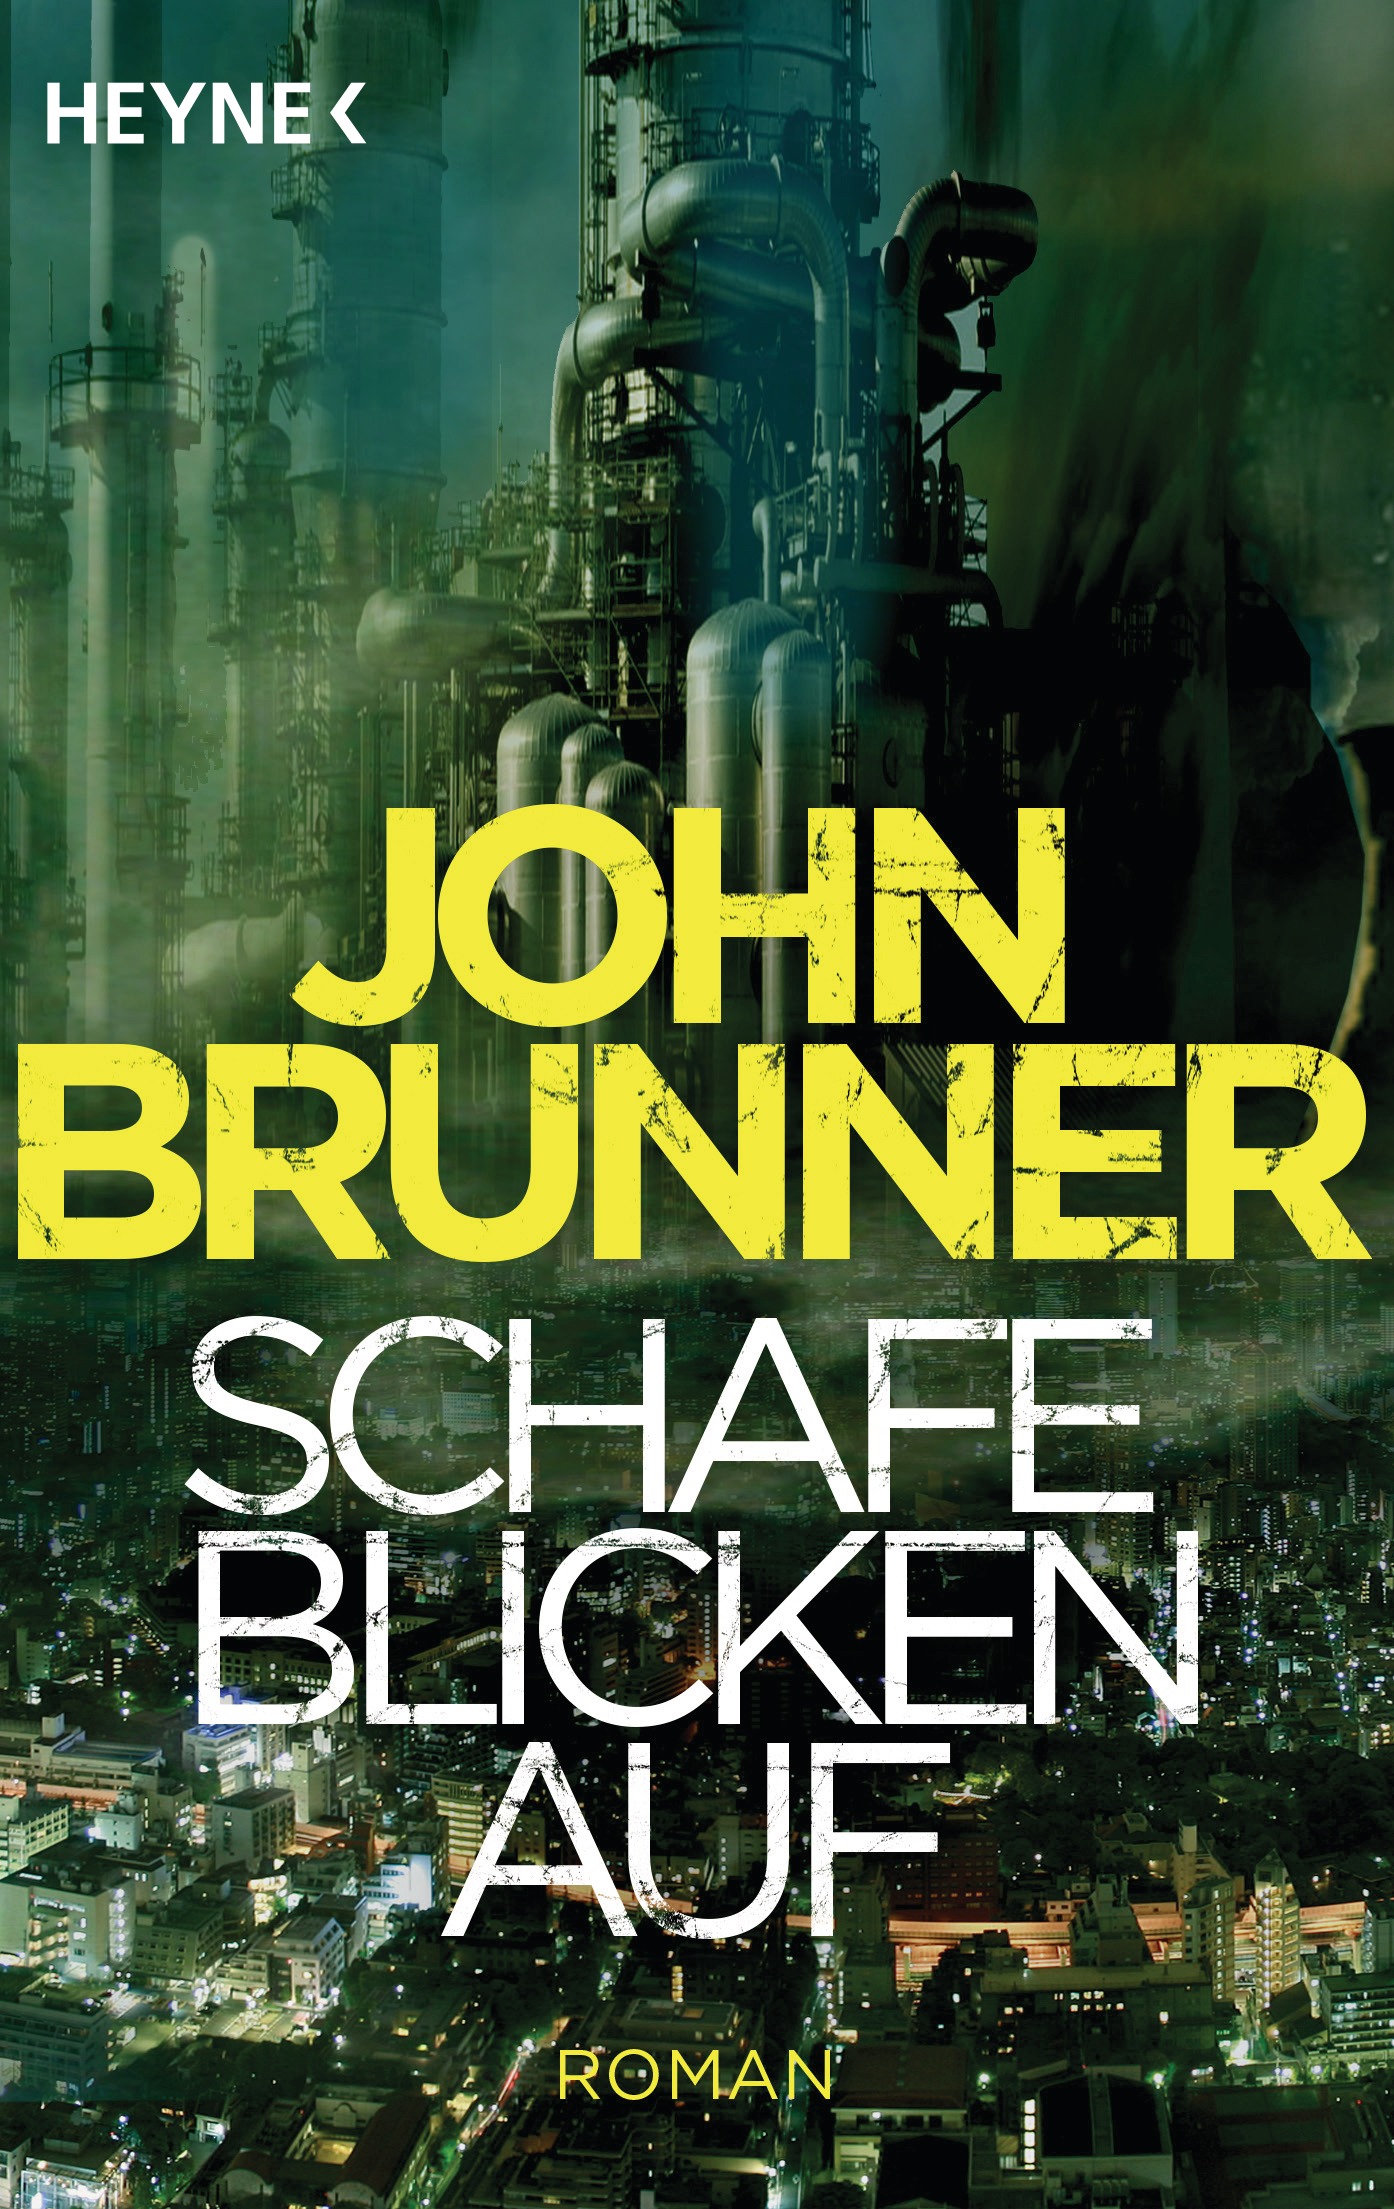 John Brunner - Schafe blicken auf - Science Fiction-Klassiker